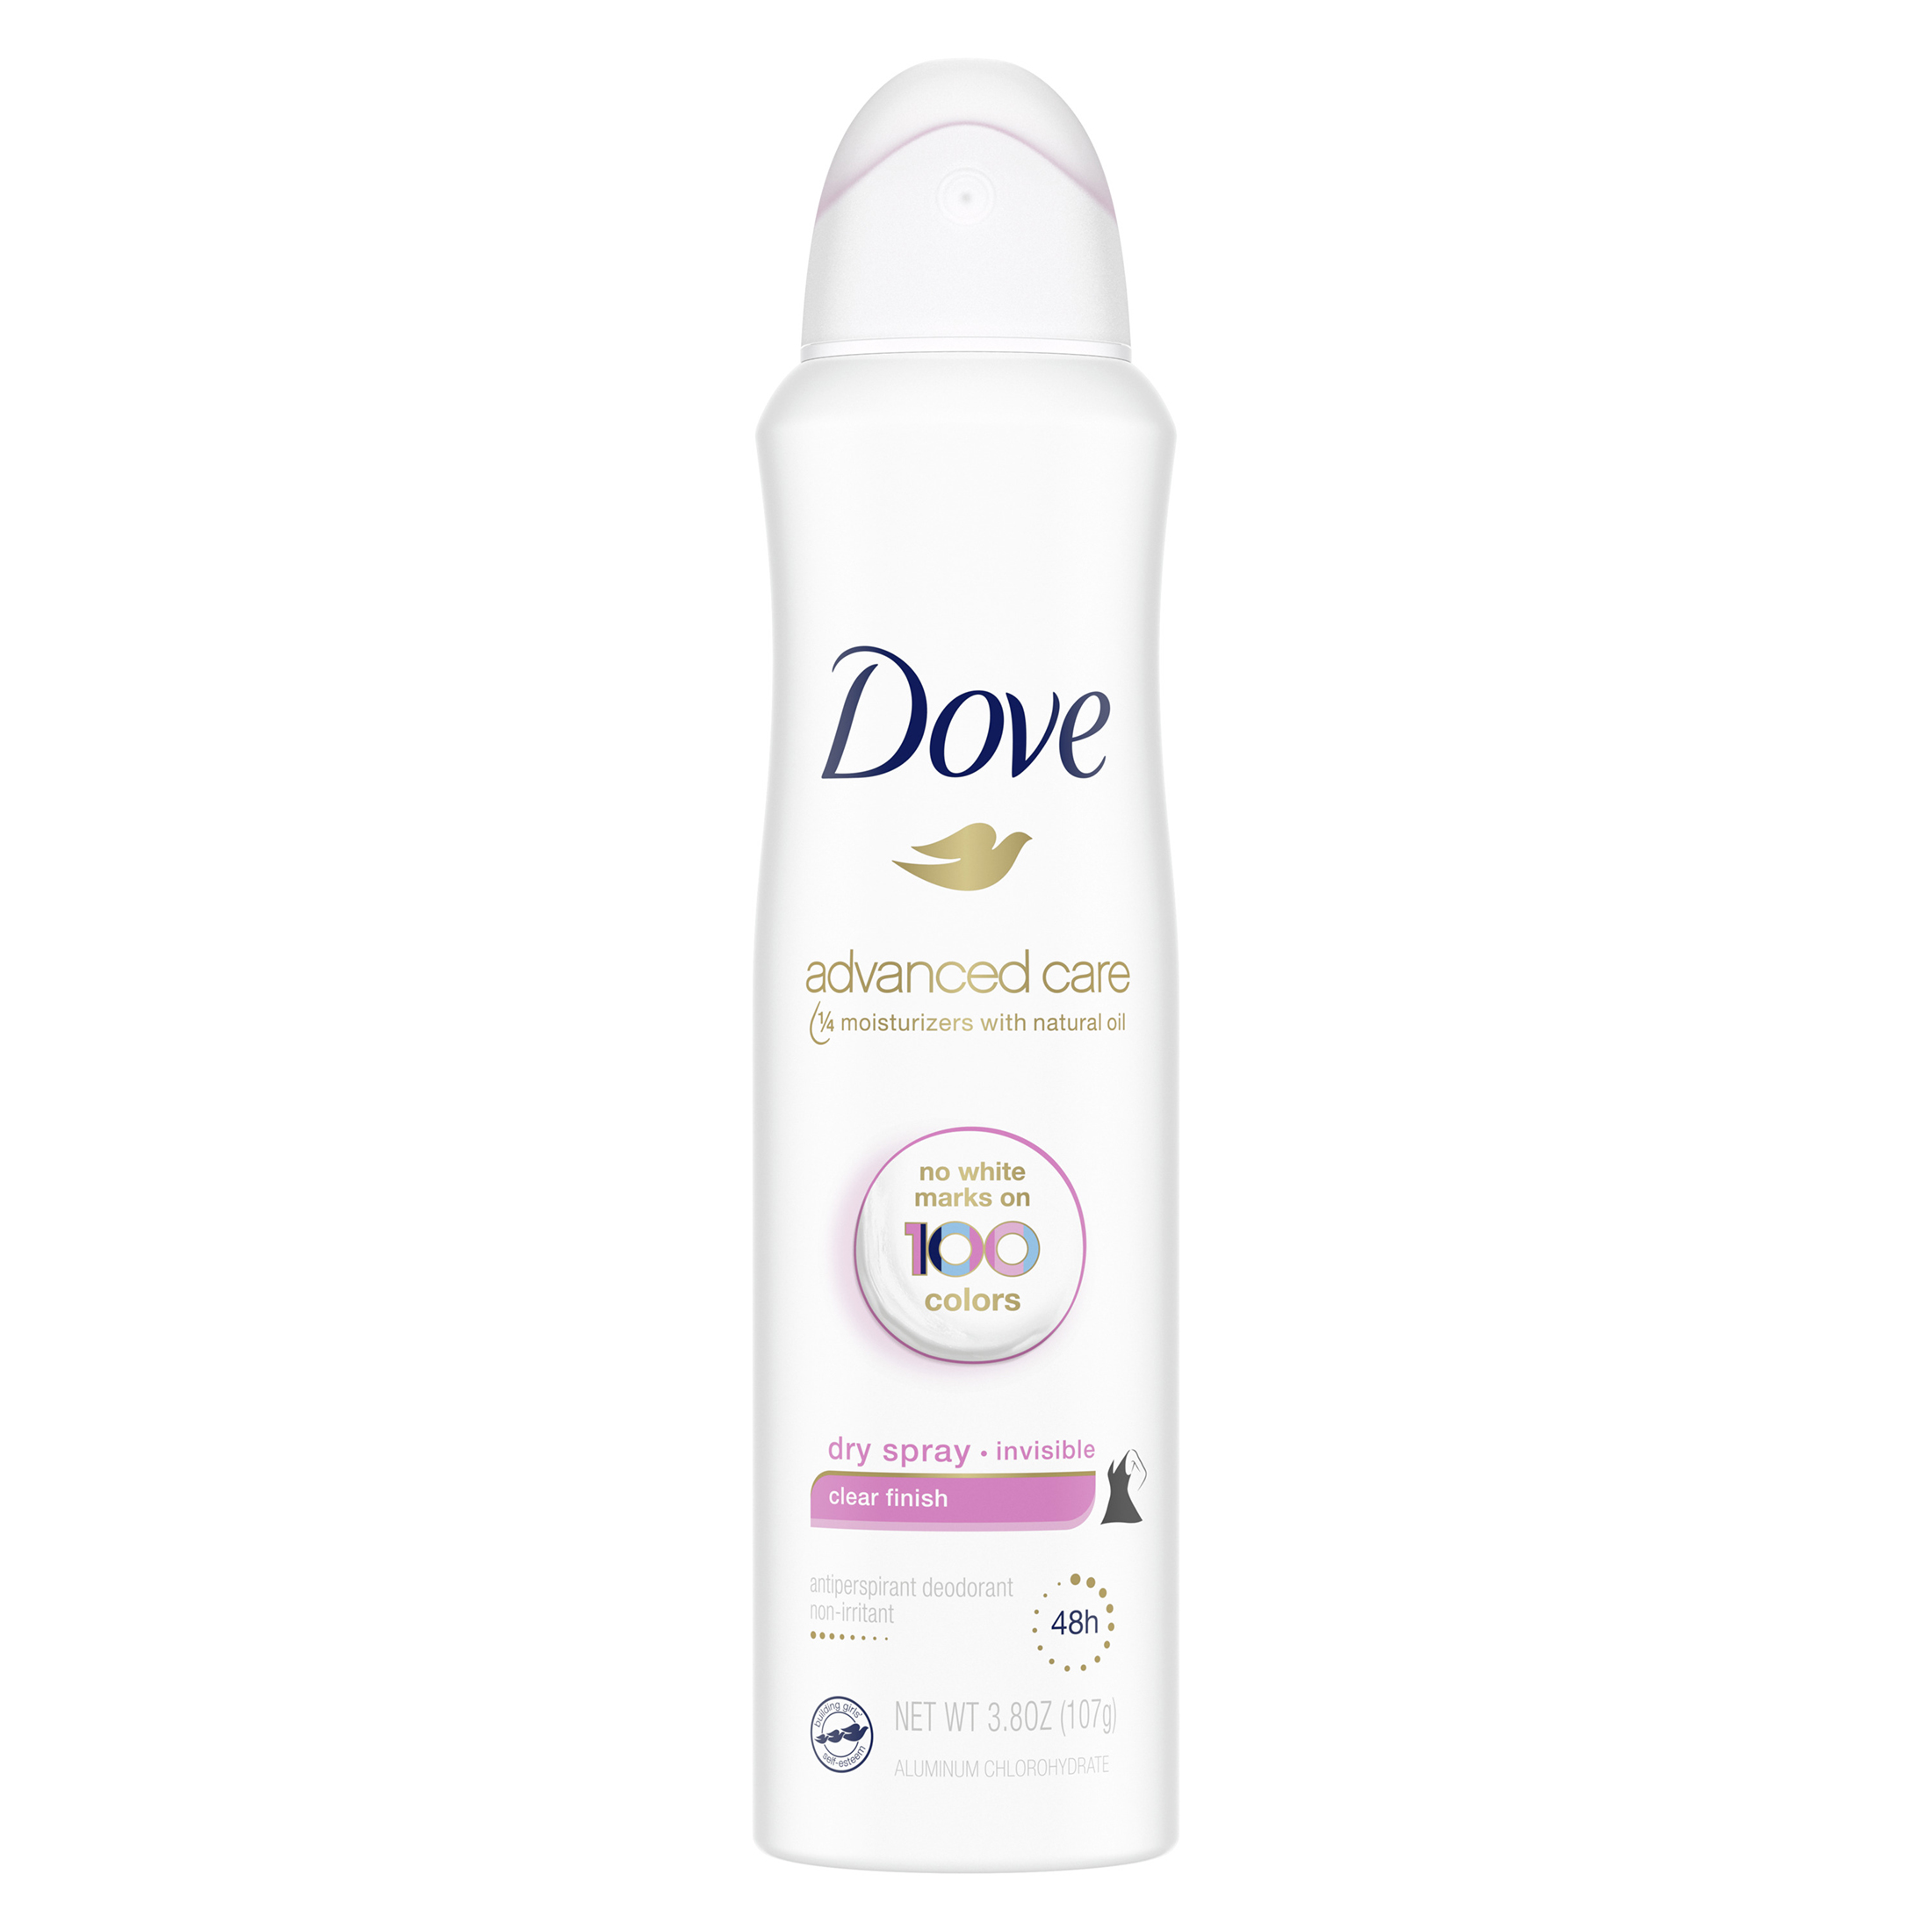 Dove Advanced Care Long Lasting Women's Antiperspirant Deodorant Dry Spray, Clear Finish, 3.8 oz - image 1 of 9